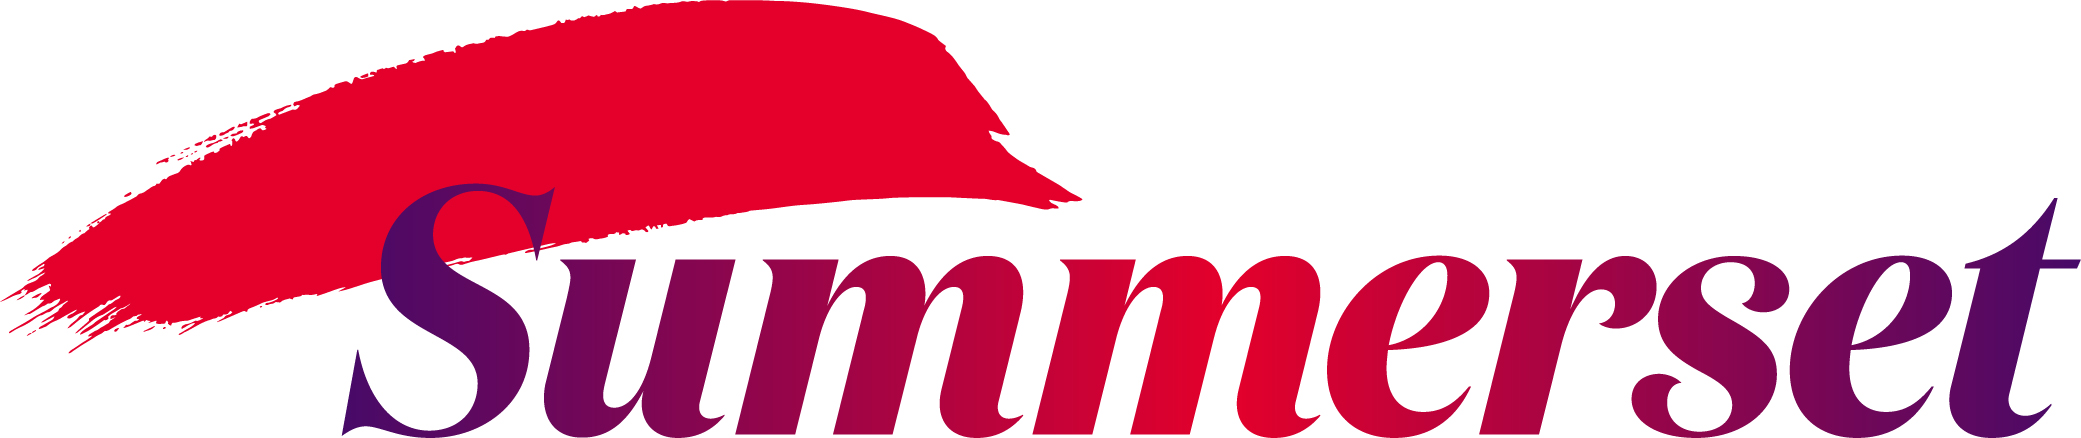 Summerset Richmond Ranges logo